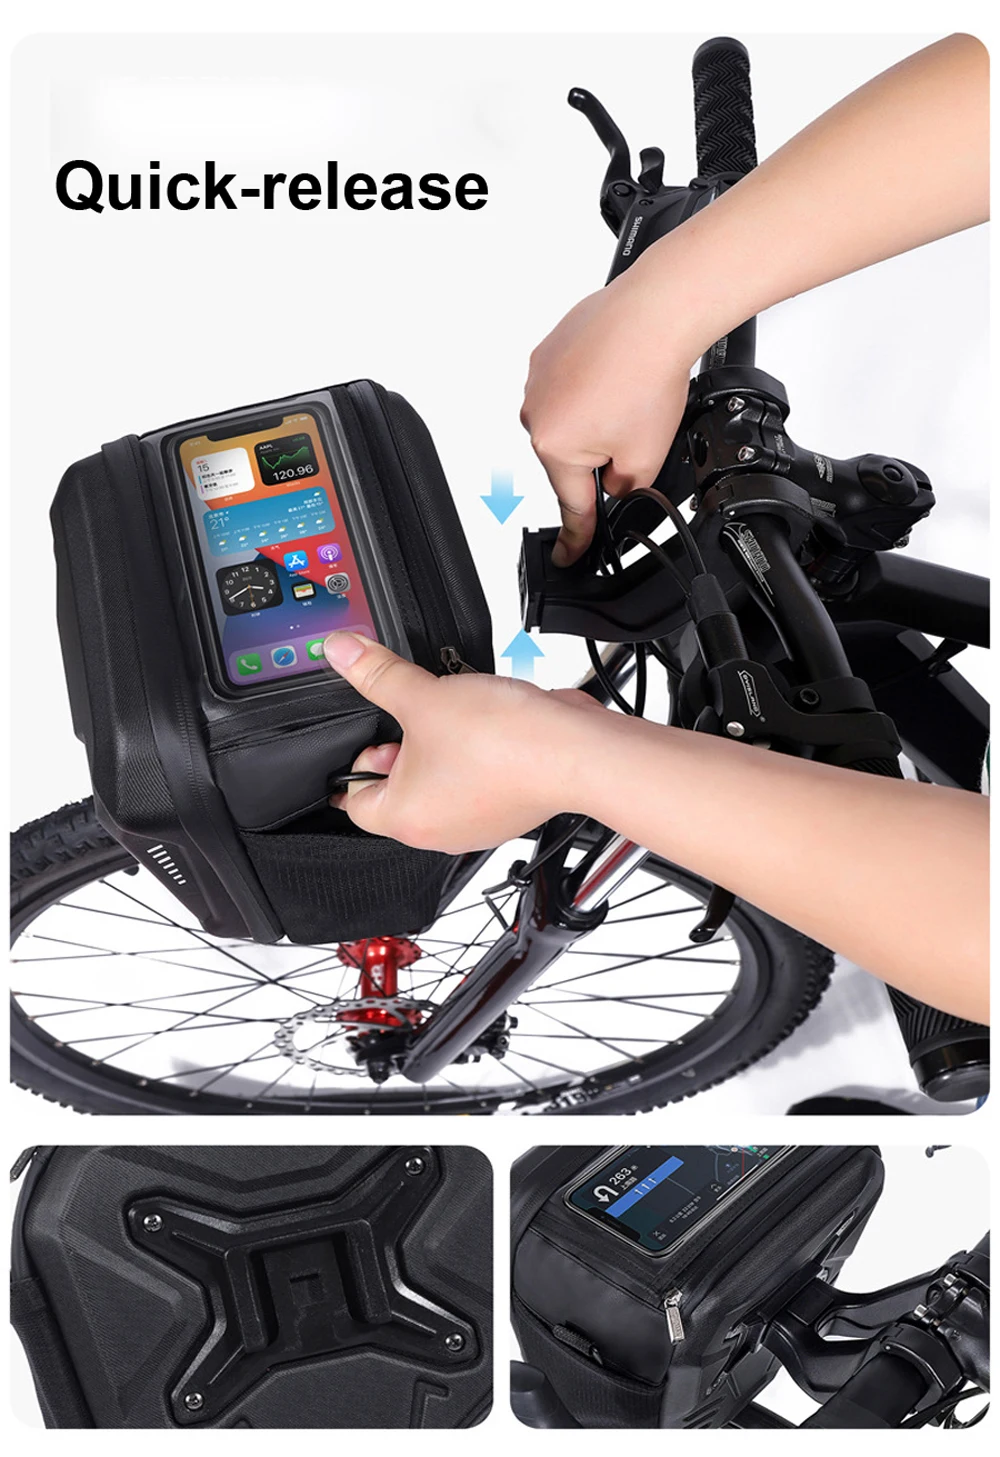 WILD MAN Bicycle Bag Big Capacity Waterproof Front Tube Cycling Bag MTB Handlebar Bag Front Trunk Pannier Pack Bike Accessories